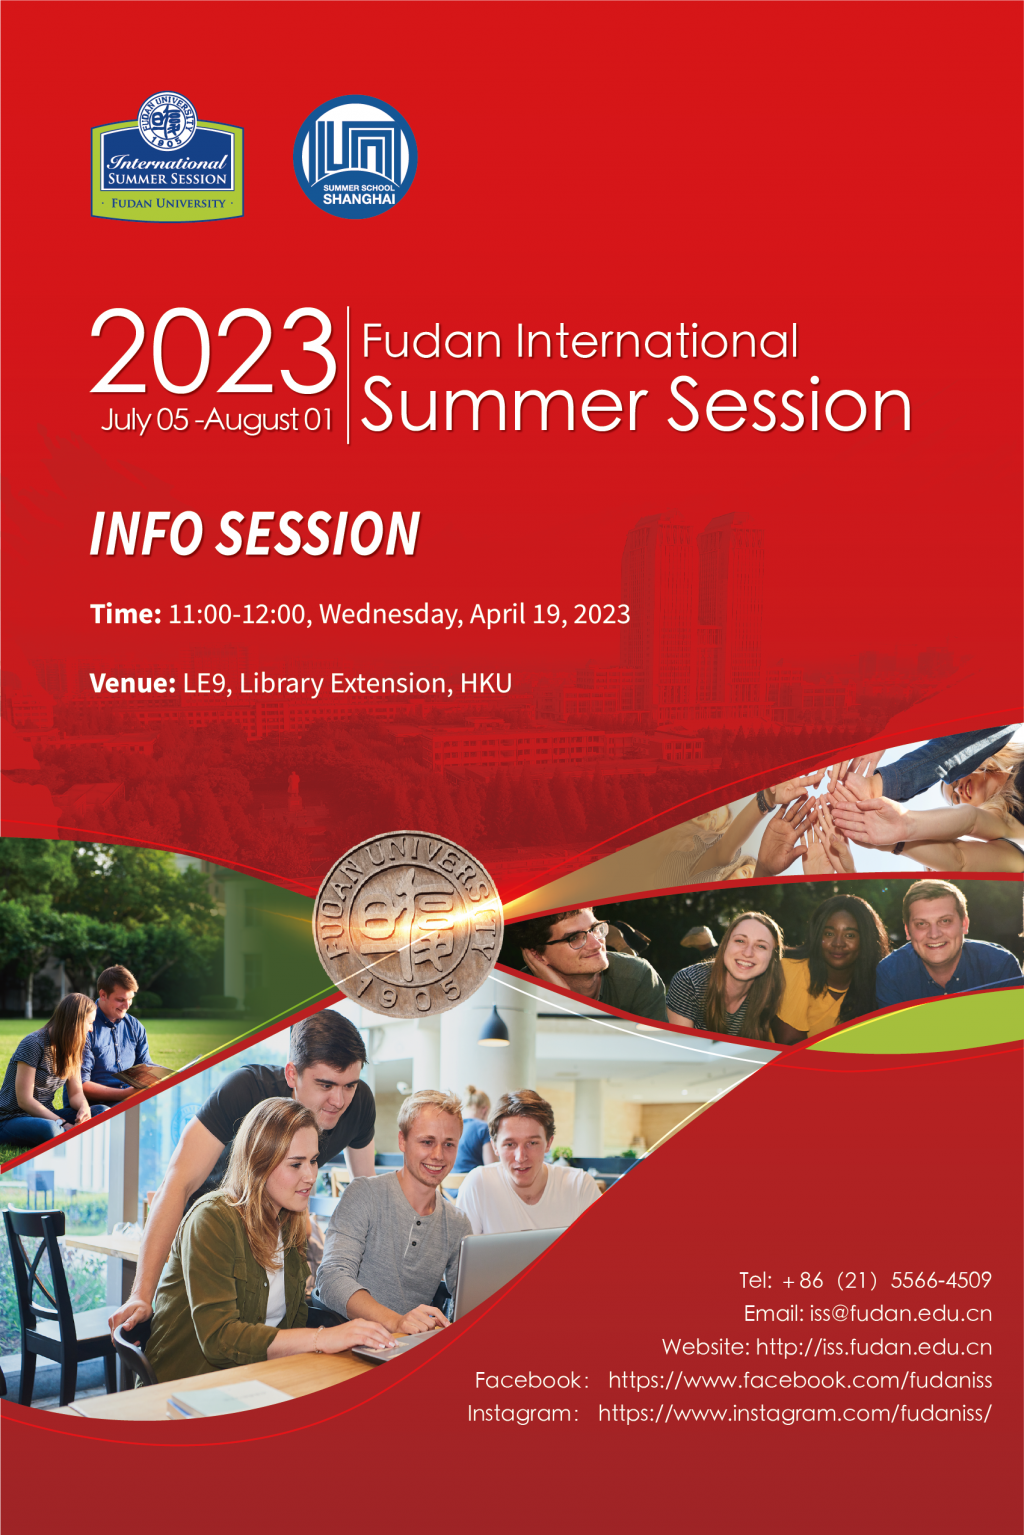 [China Vision] Fudan University International Summer Session 2023 Information Session